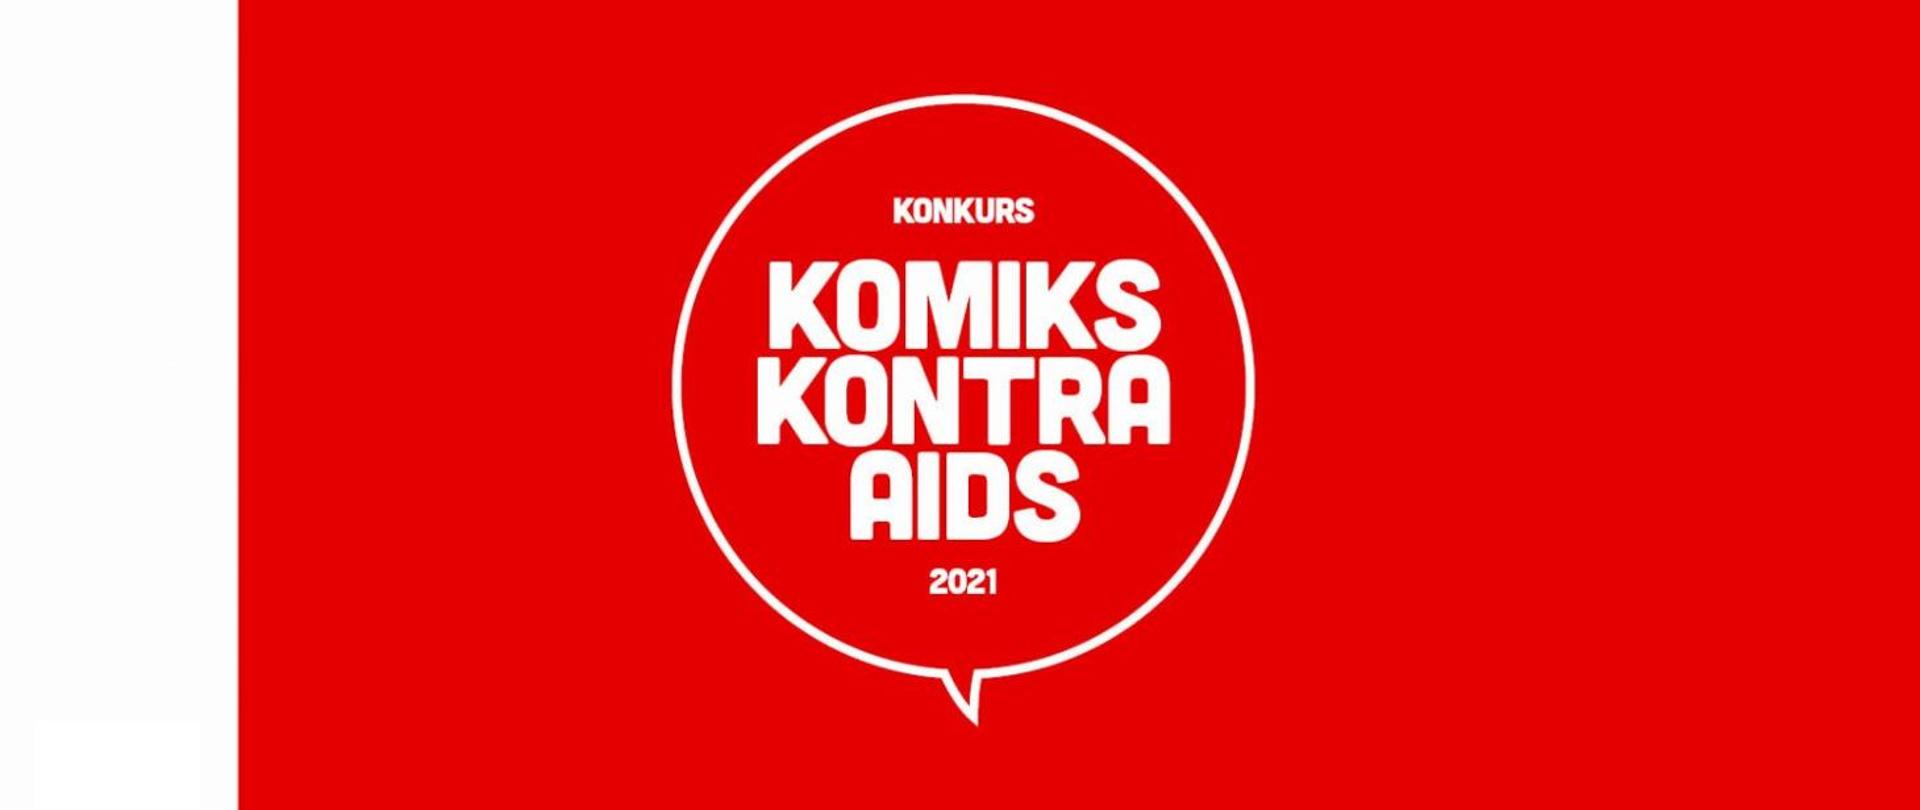 Konkurs "Komiks kontra AIDS 2021"